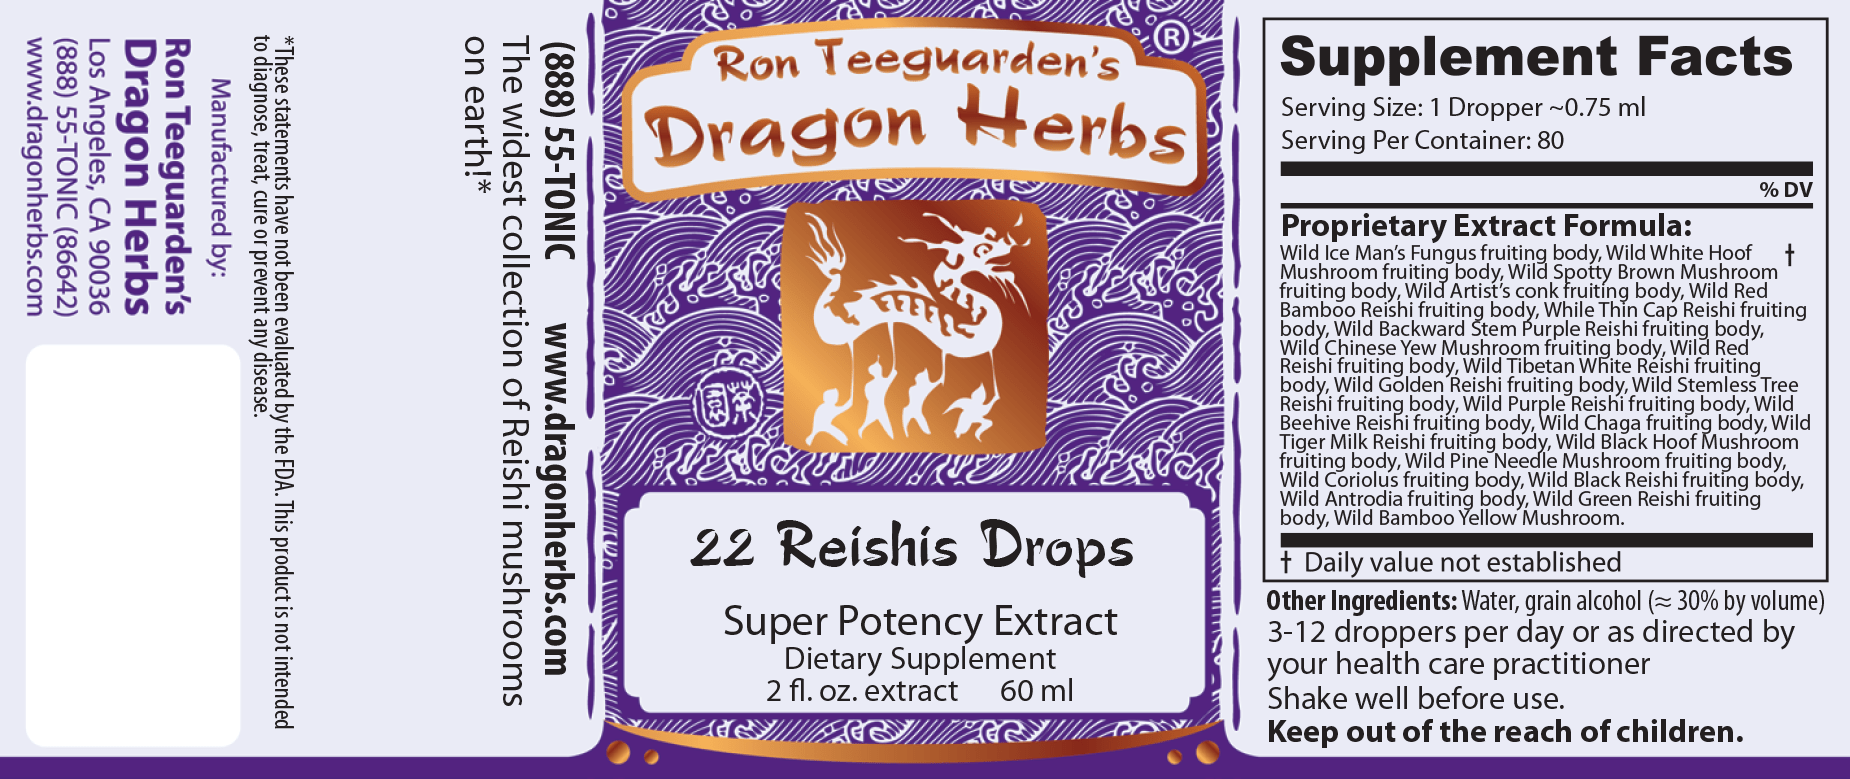 22 Reishis Drops Label - Dragon Herbs